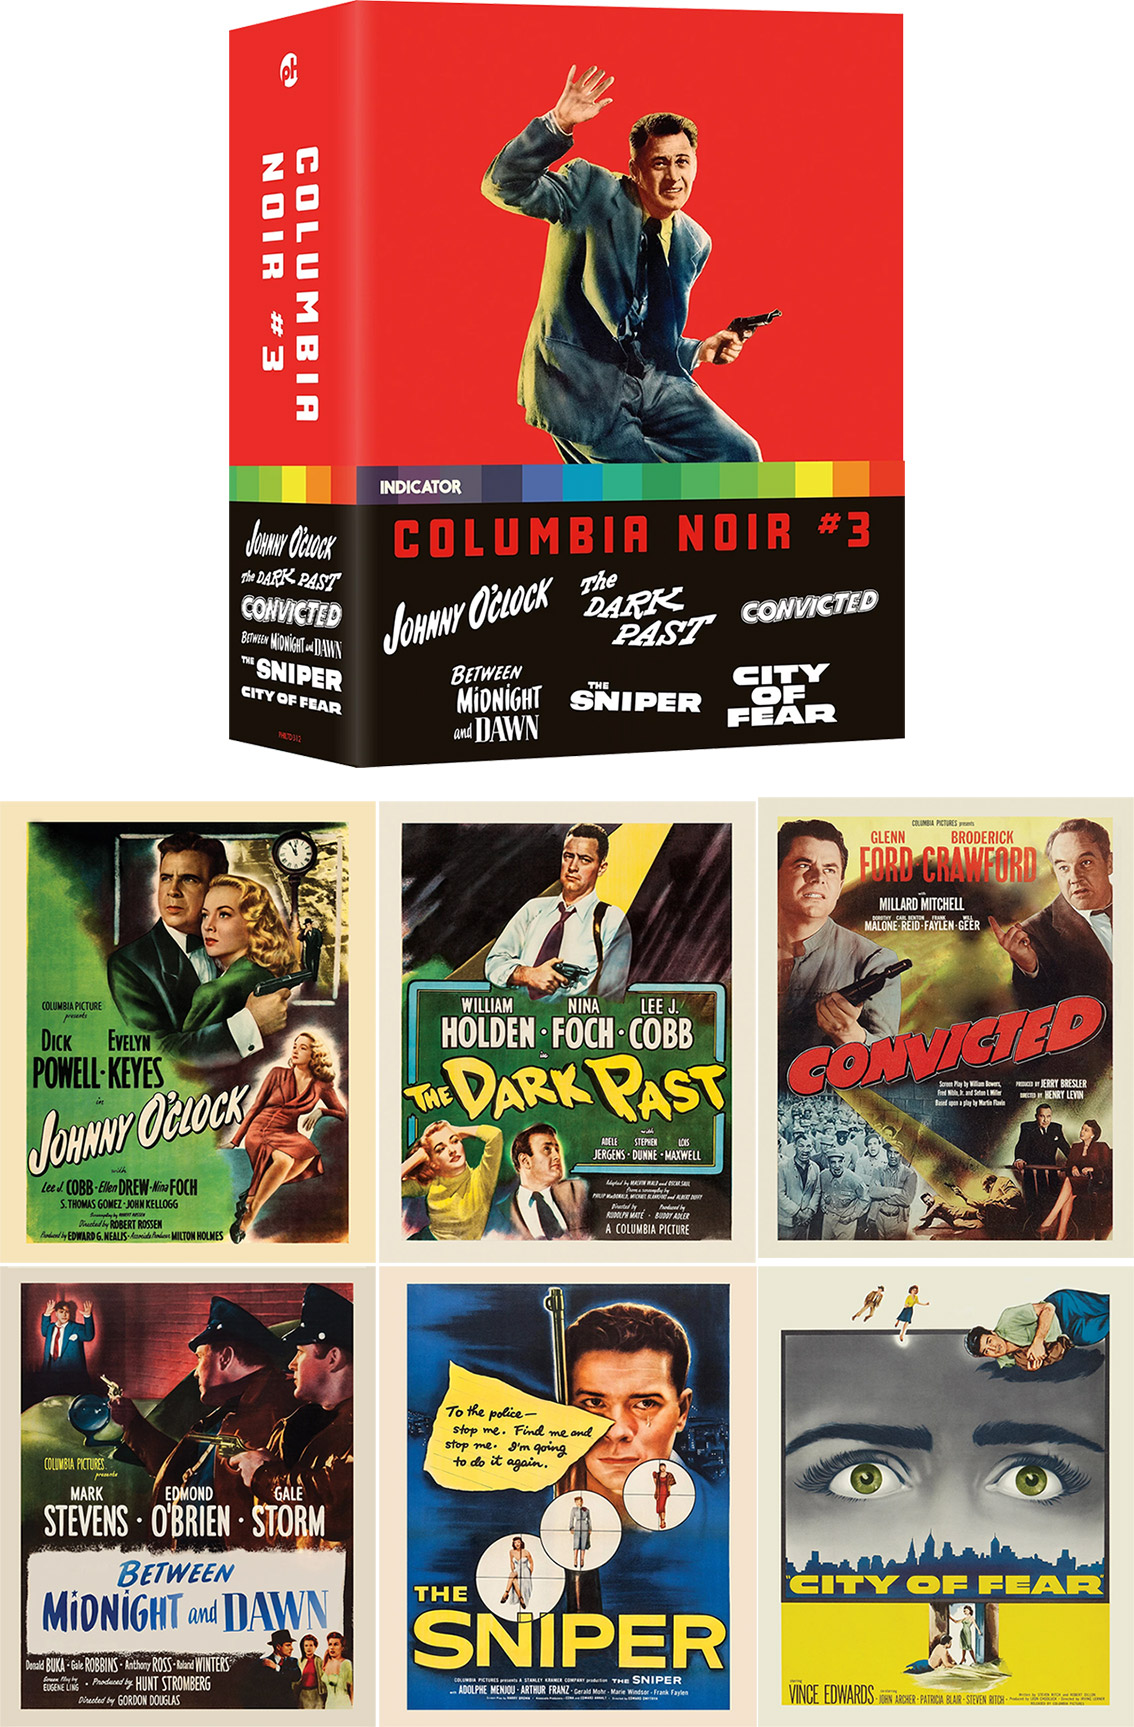 Columbia Noir #3 Blu-ray cover artwork